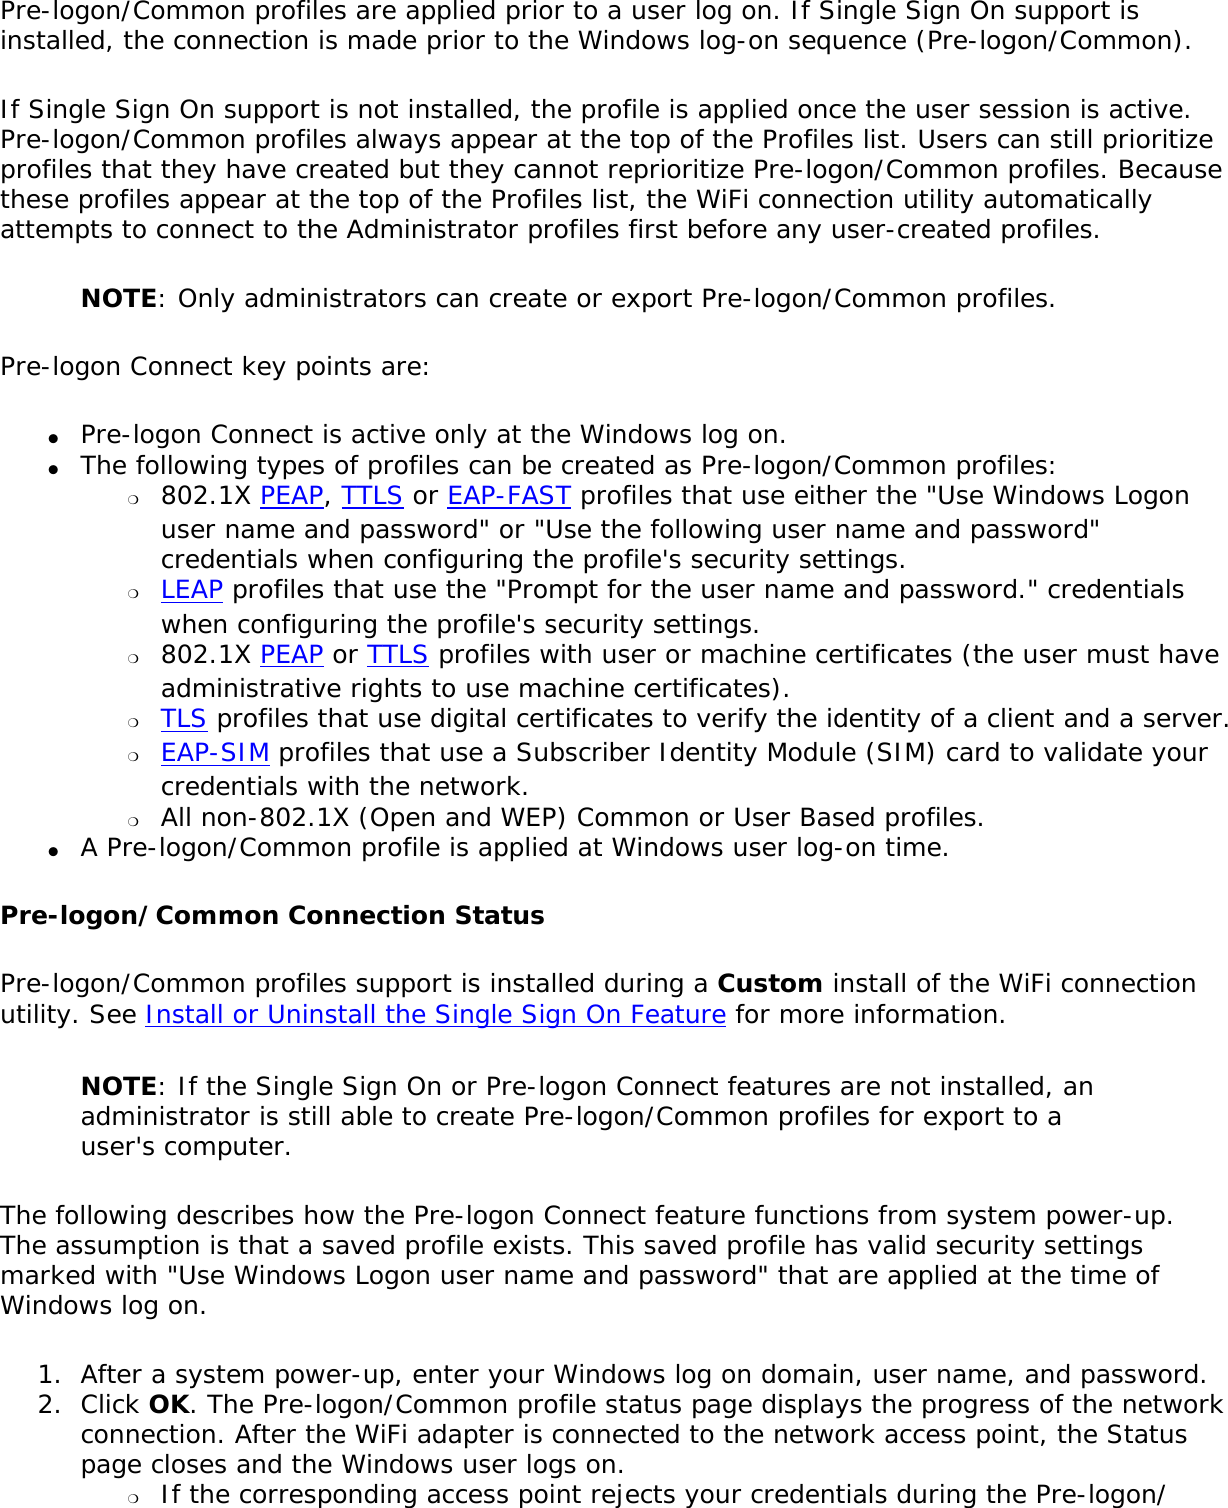 Page 121 of Intel 112BNM Intel Centrino Wireless-N 1000 User Manual Contents